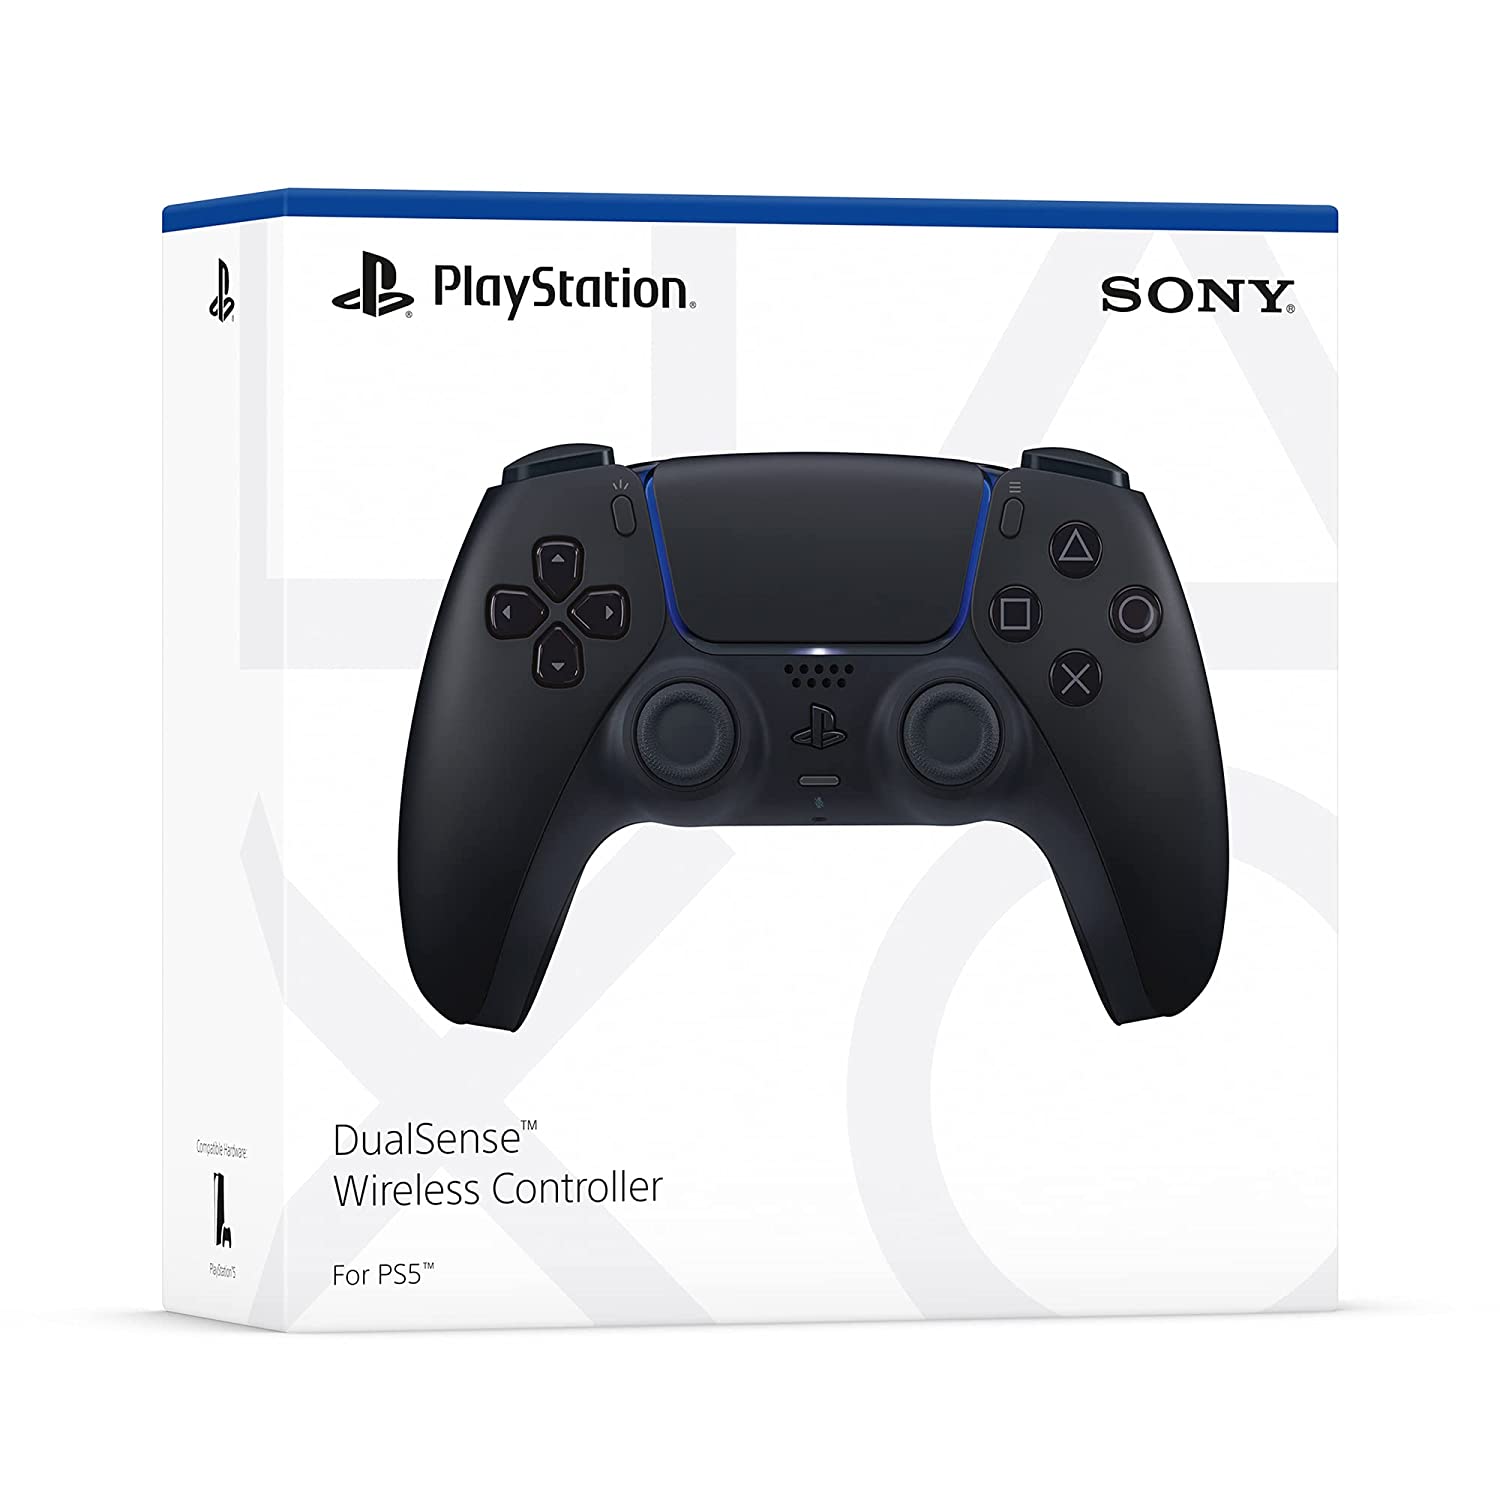  Playstation DualSense Wireless Controller